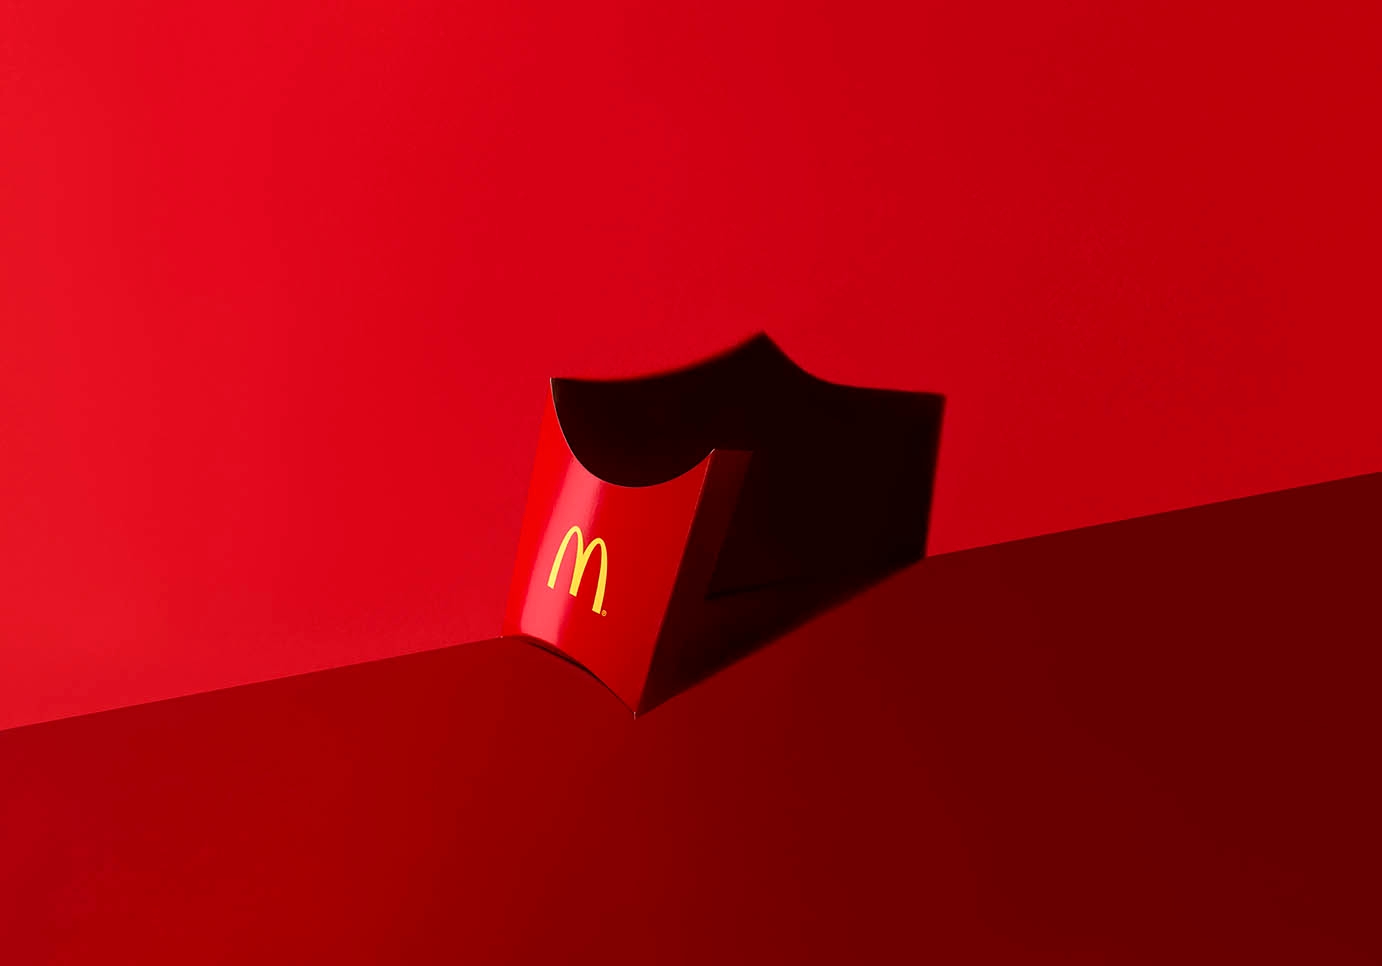 mcdonalds box on red background